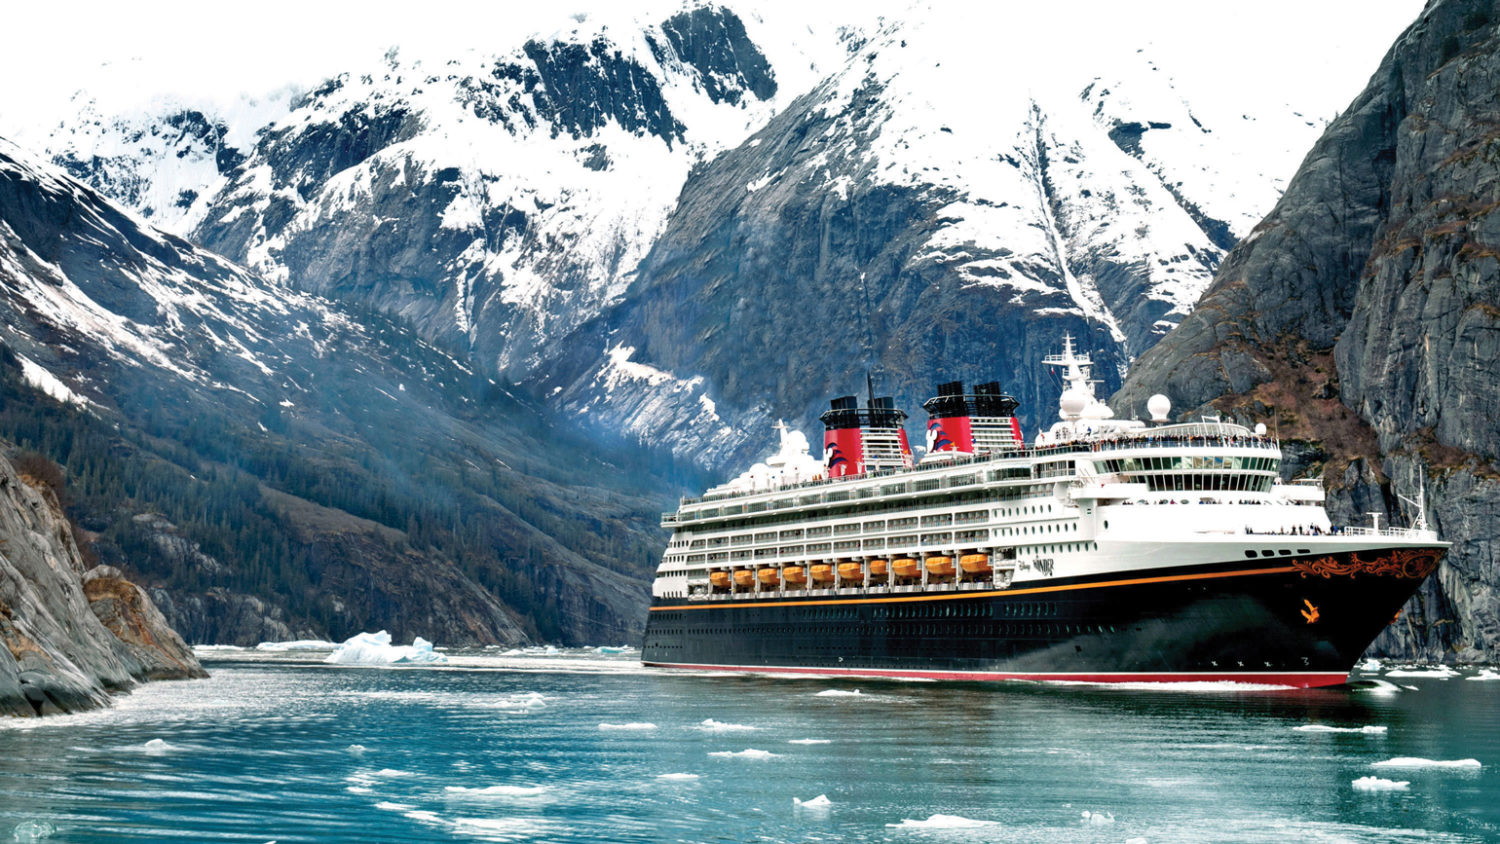 Travel Bucket List Multigenerational Travel on a Disney Cruise to Alaska